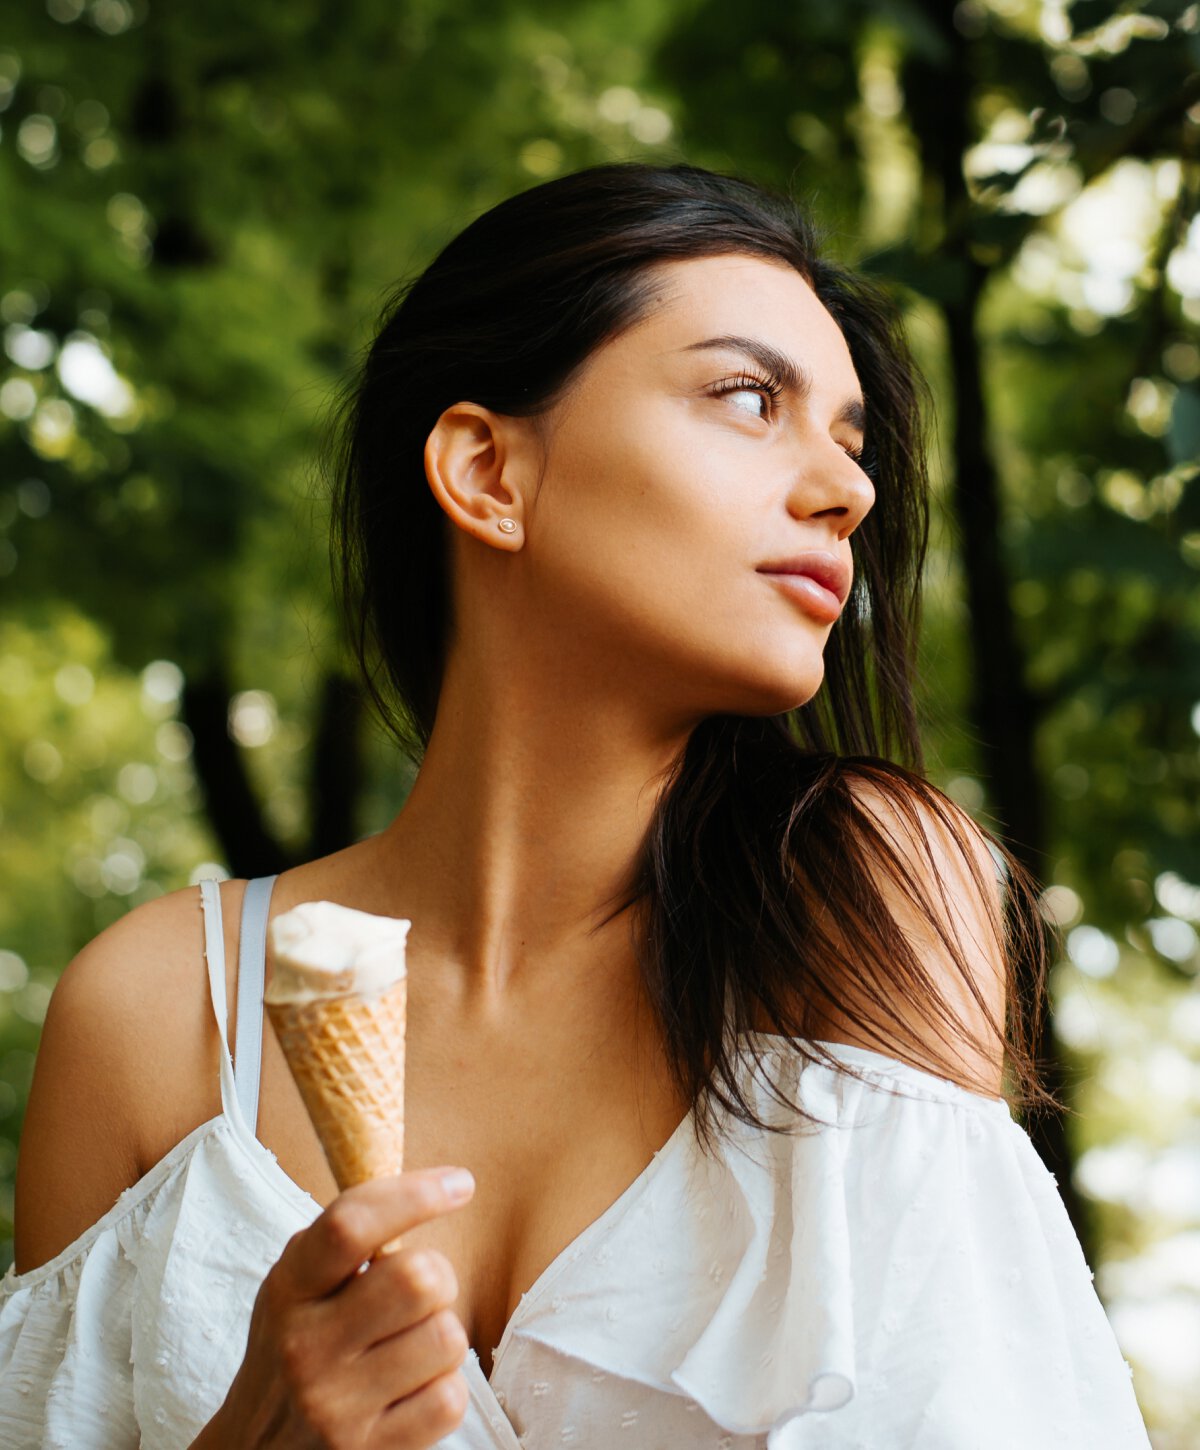 Murrieta dermal fillers model holding an ice cream cone